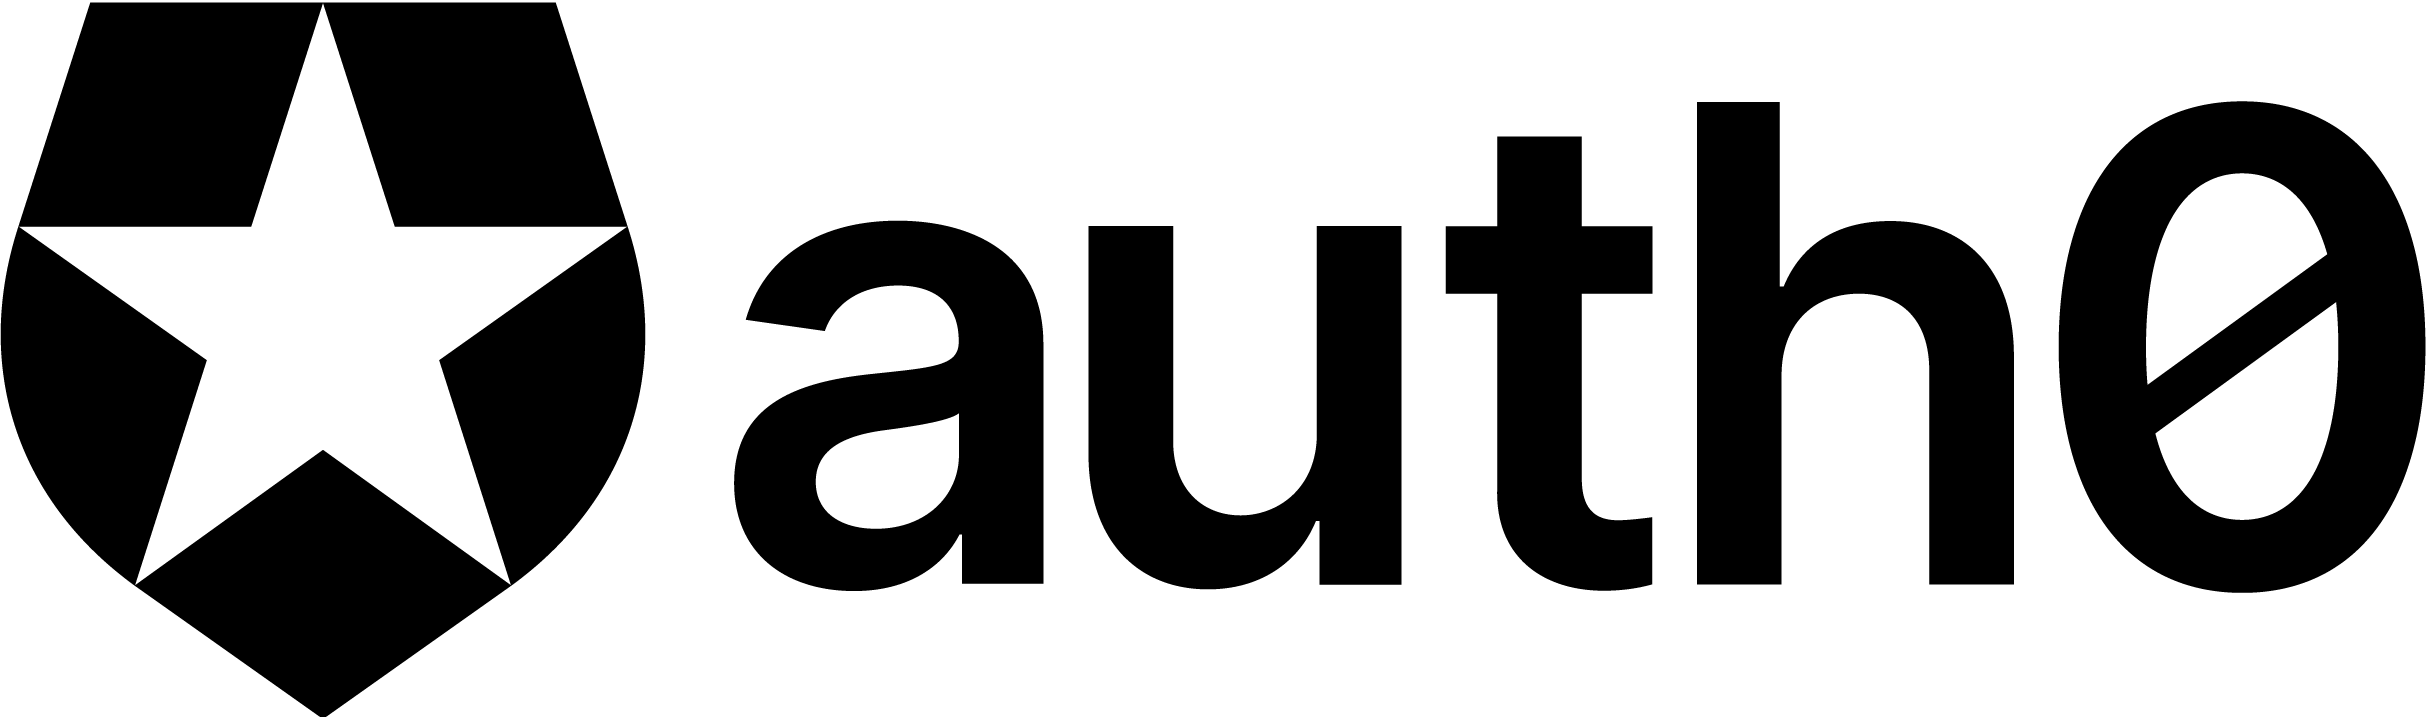 Auth0 logo dark